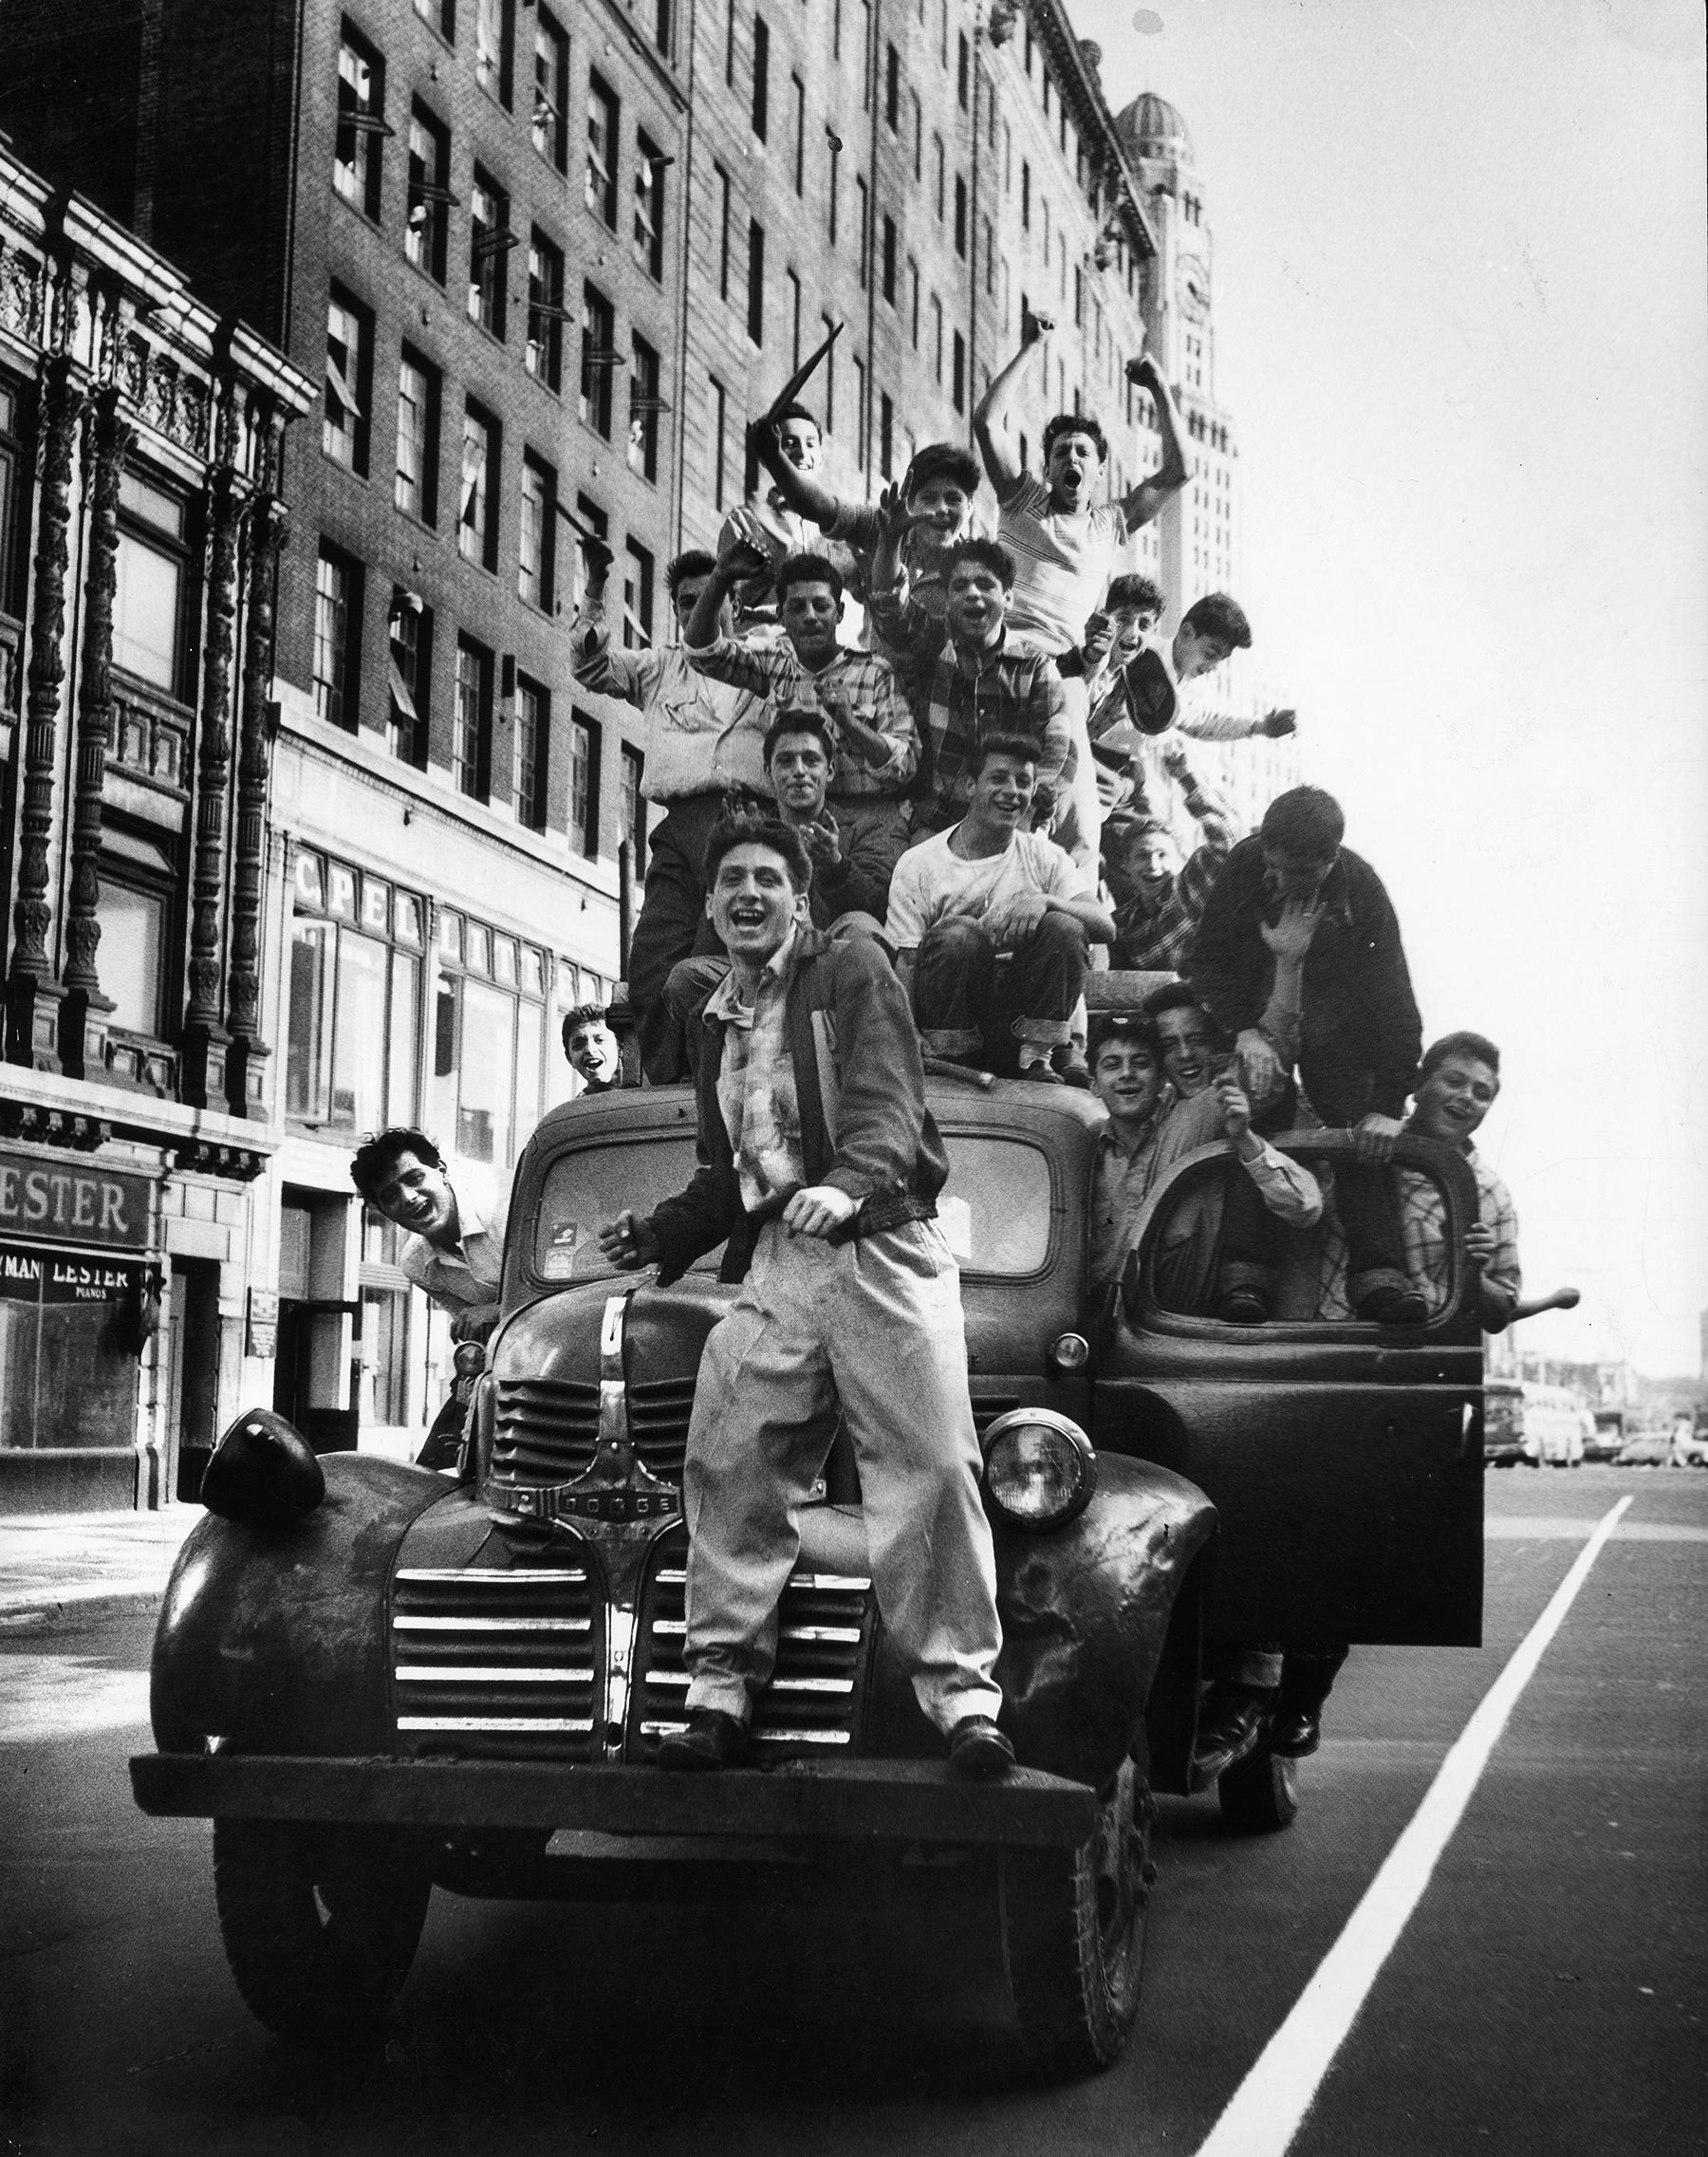 Martha Holmes Black and White Photograph - Brooklyn Dodger fans celebrating World Series victory, Flatbush Avenue, Brooklyn